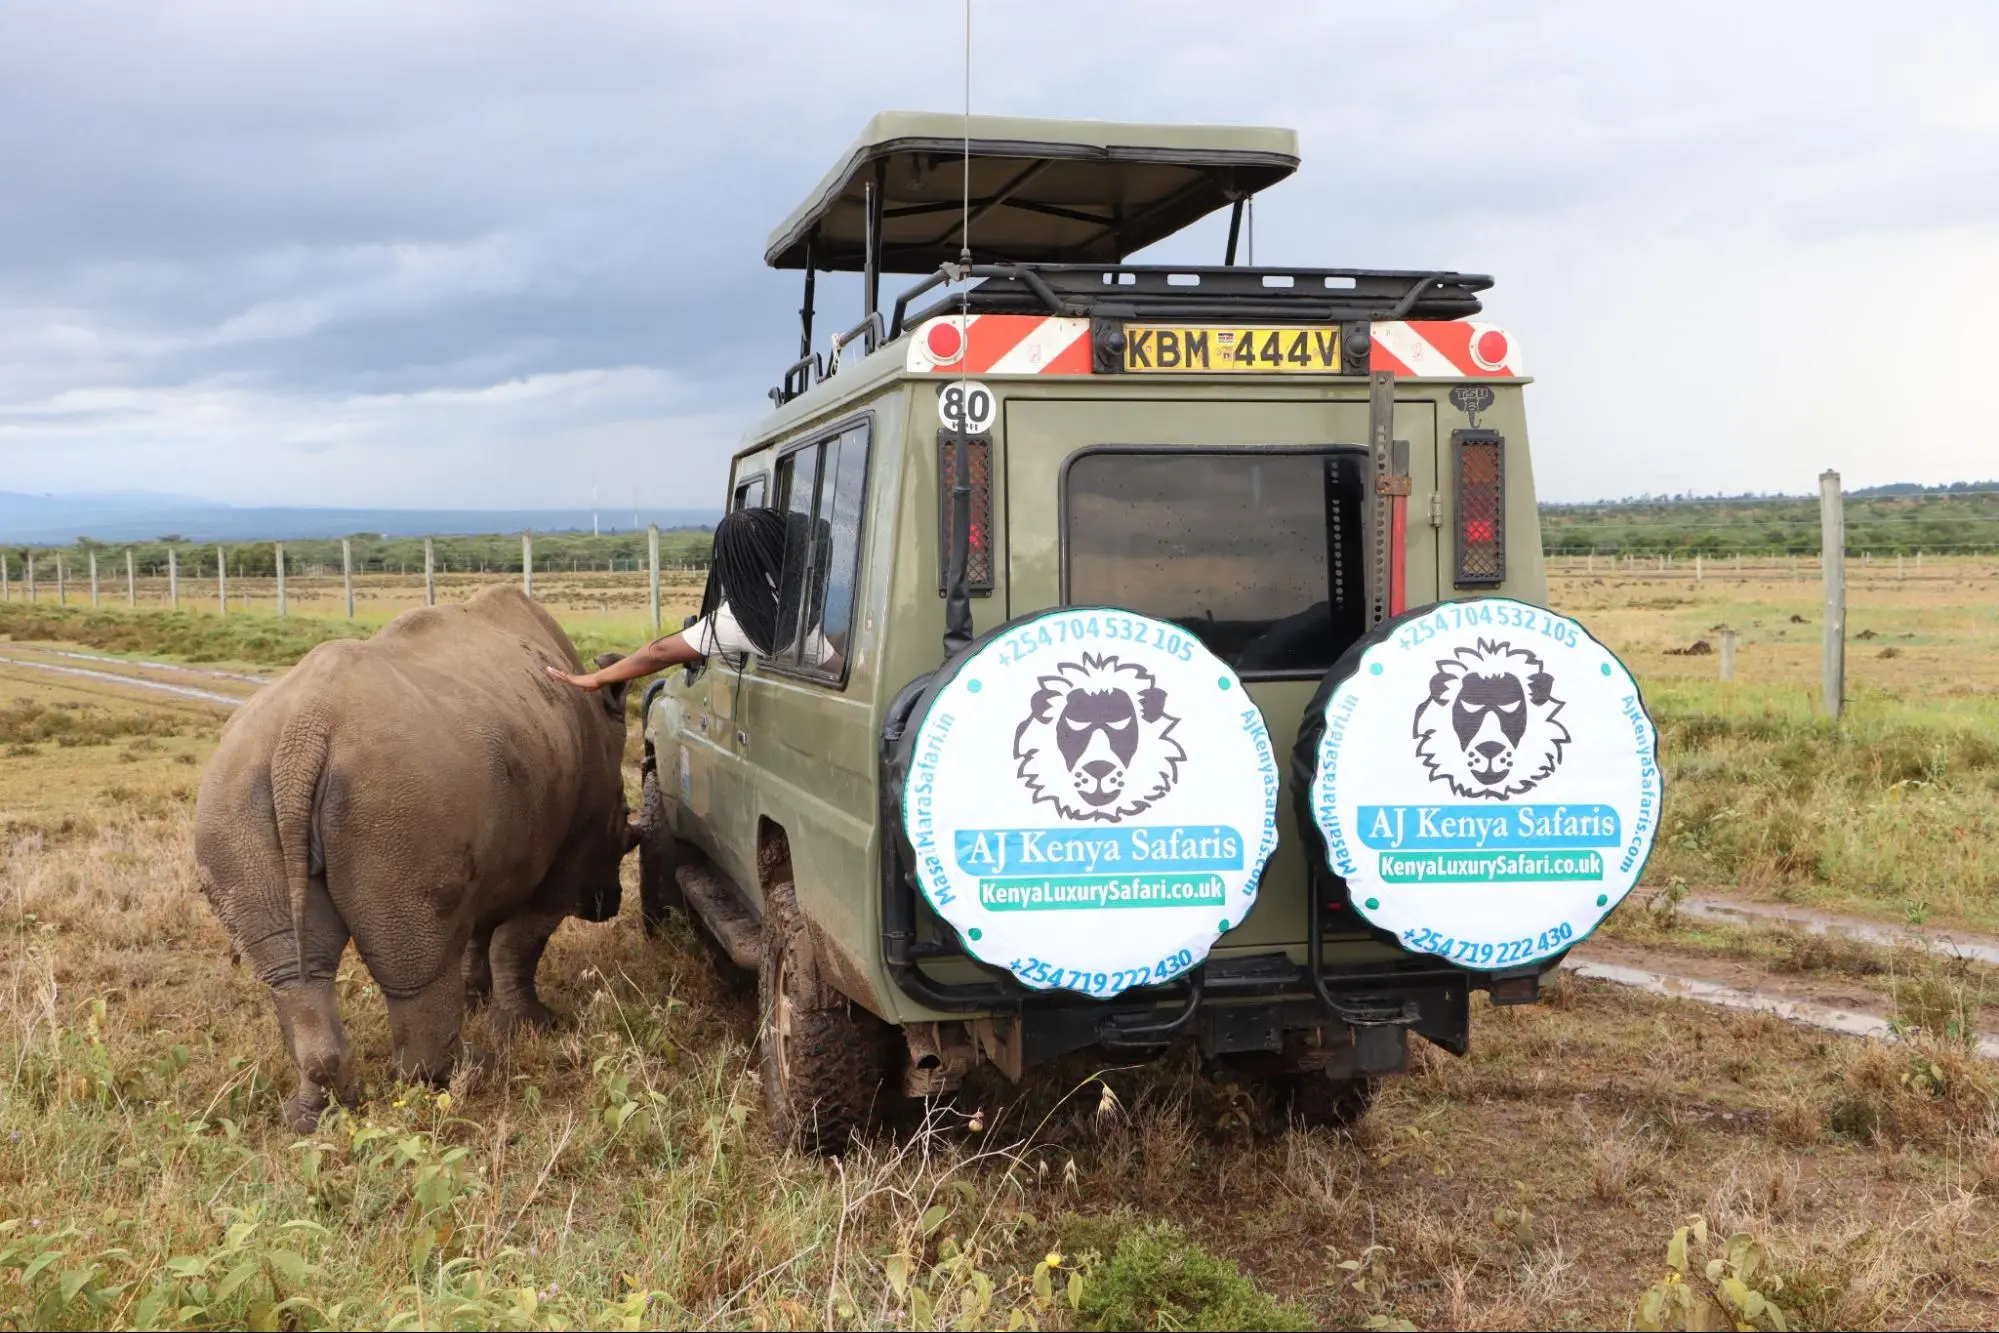 Kenya tours - our safari land cruiser in Ol Pejeta Conservancy